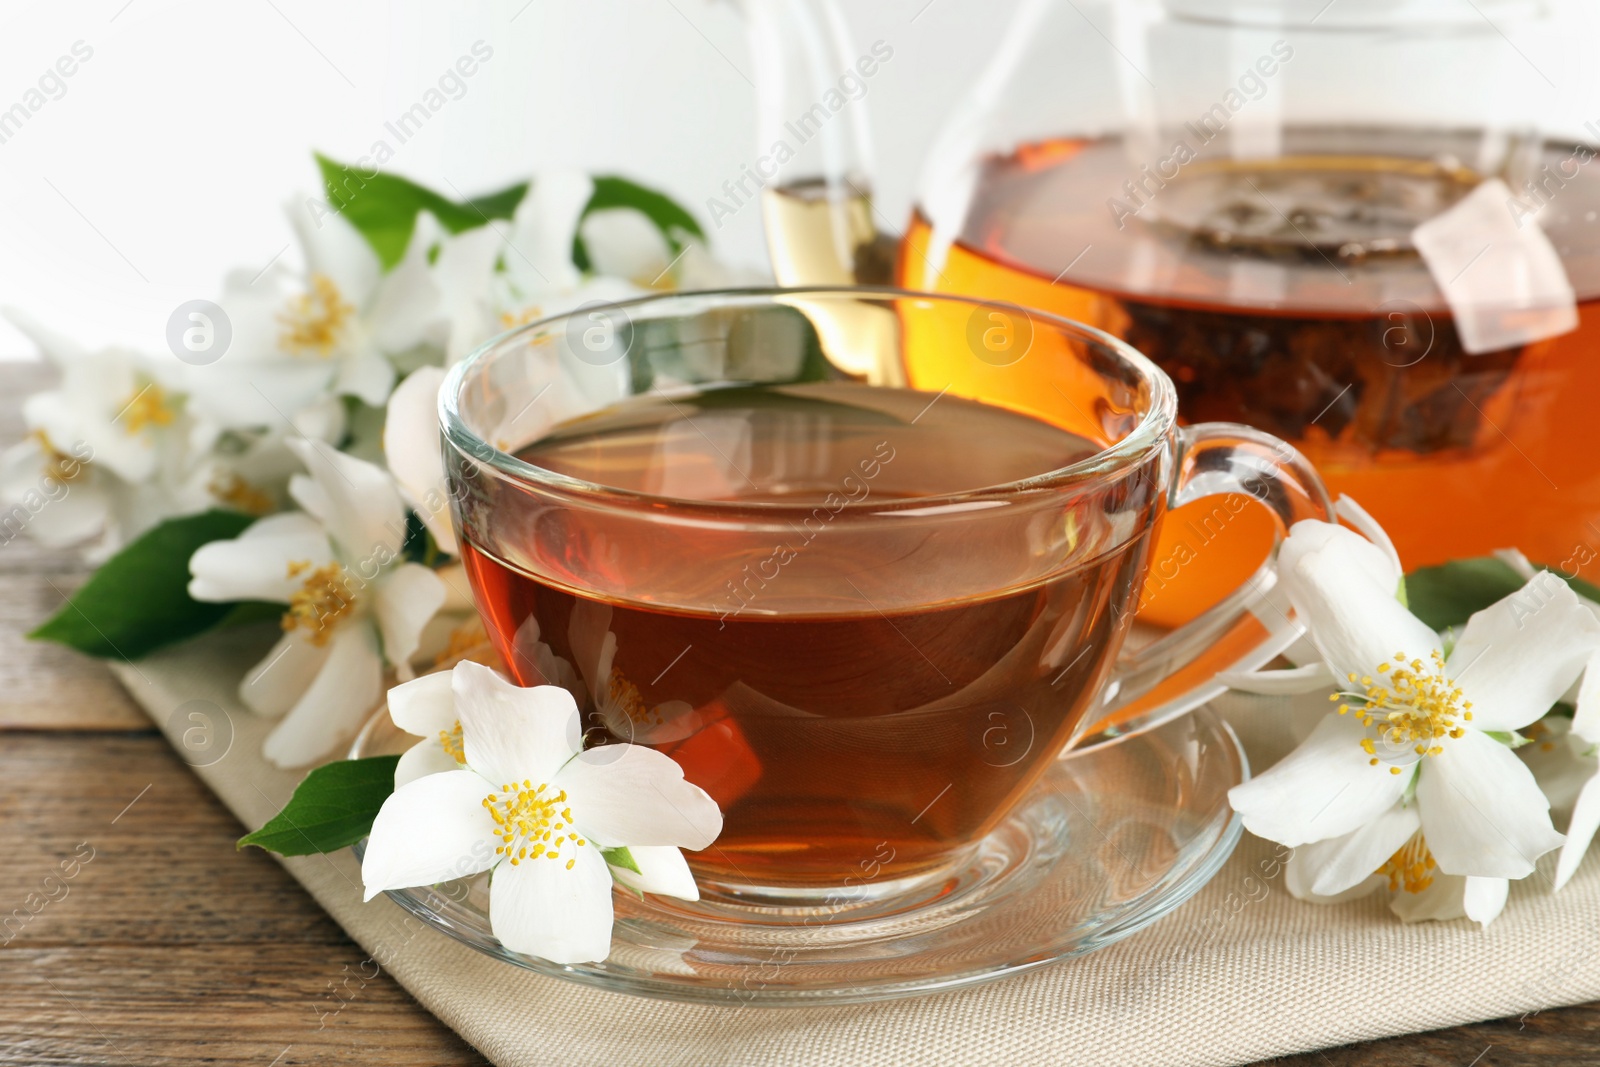 Photo of Aromatic jasmine tea and fresh flowers on wooden table, closeup